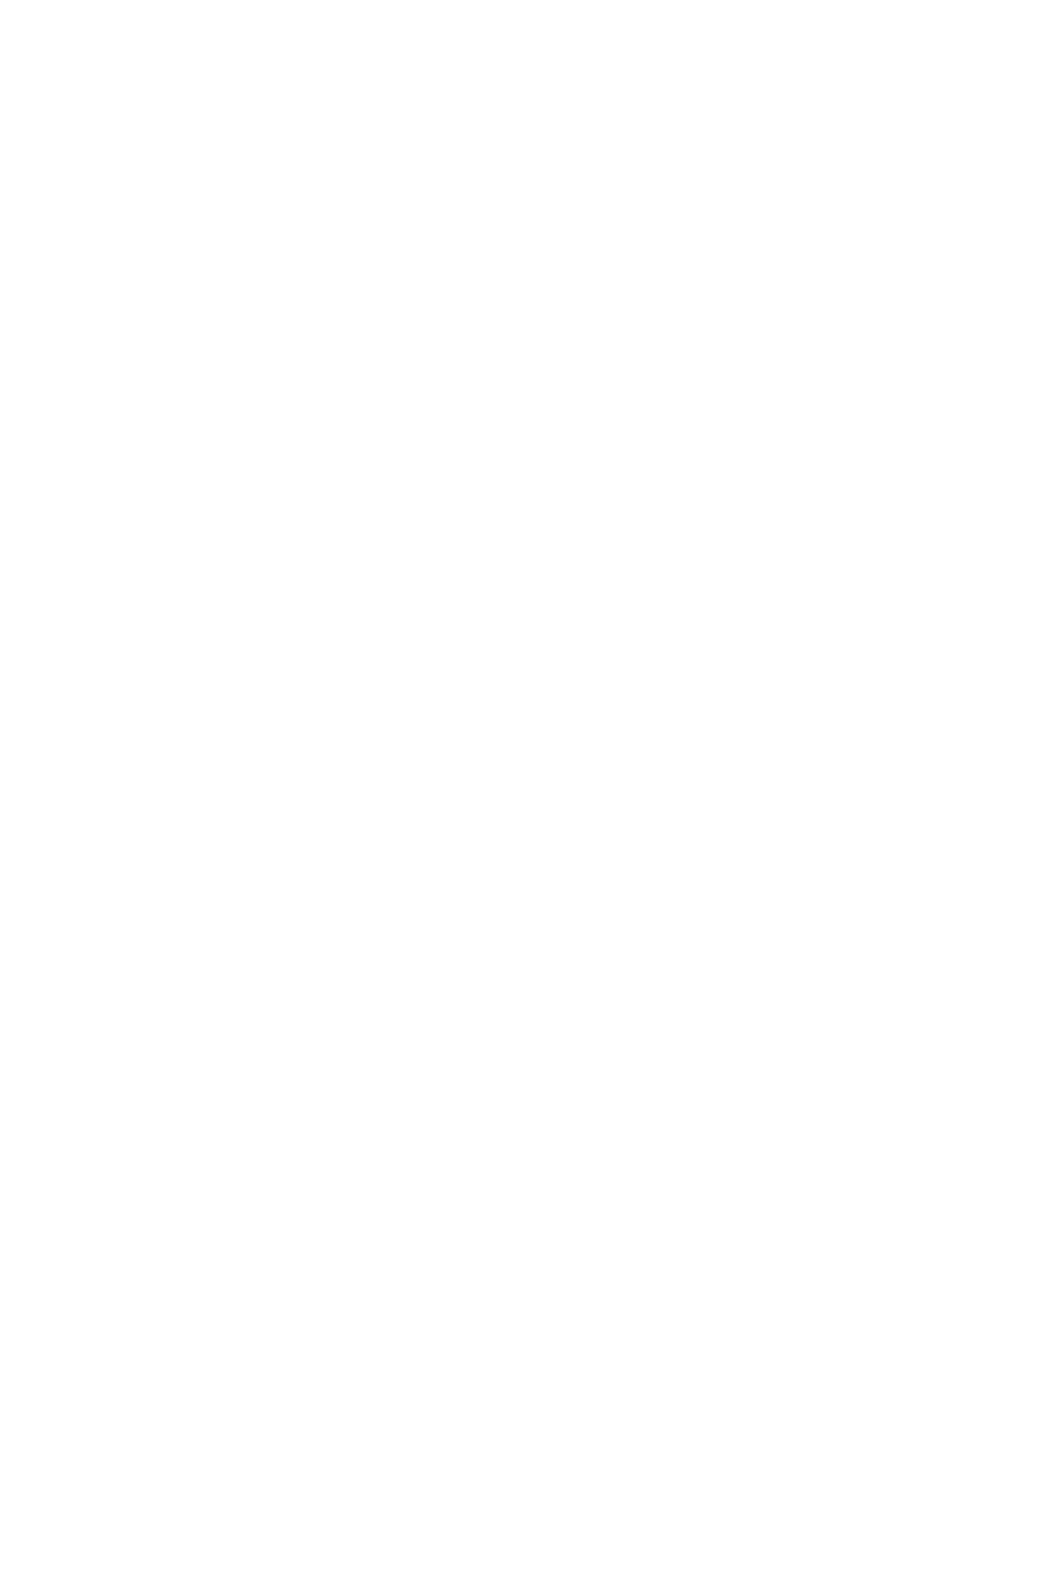 FIGS logo for dark backgrounds (transparent PNG)